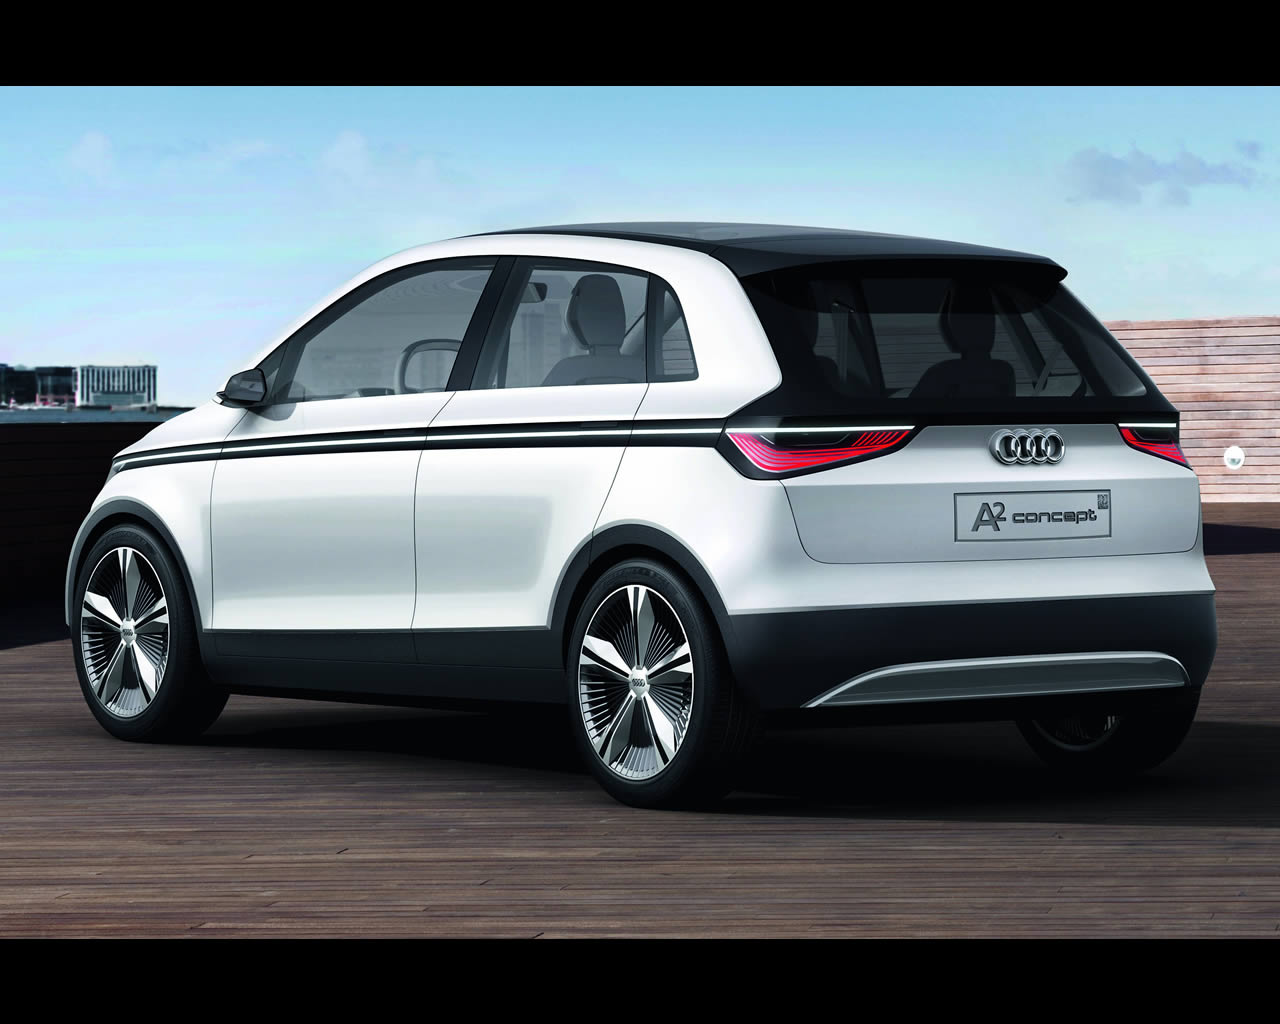 Audi A2 Electric Concept 2011